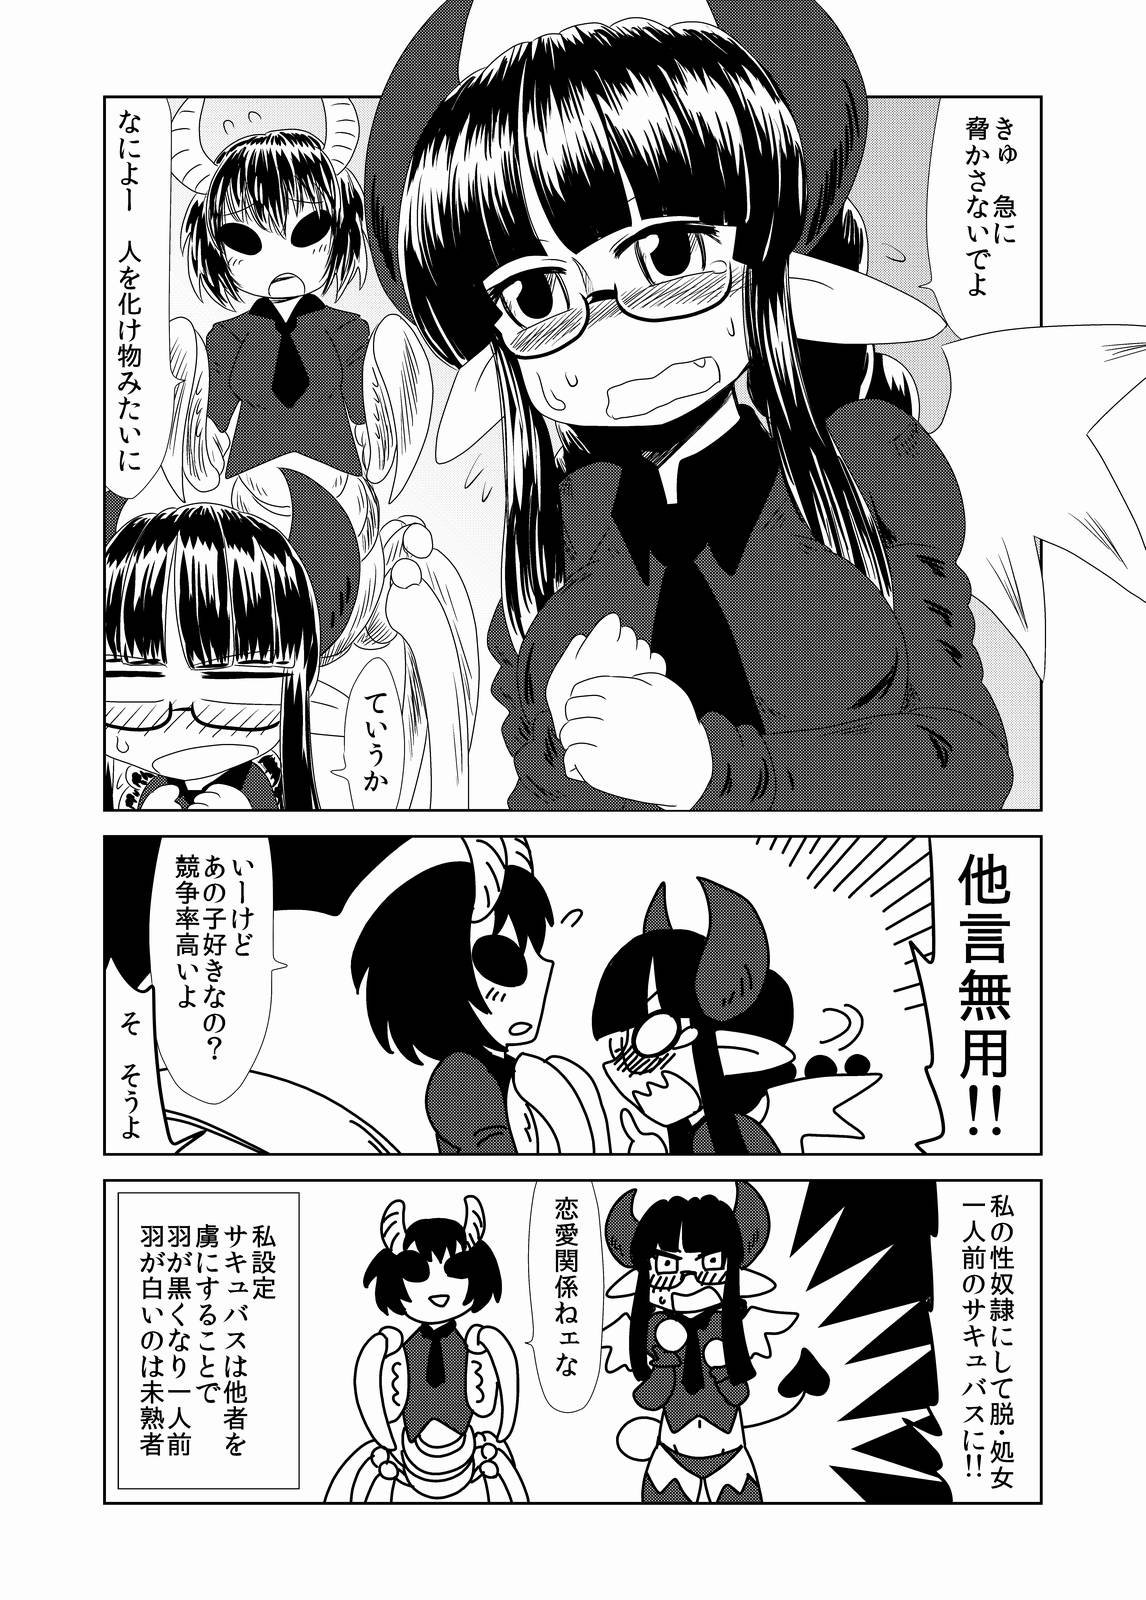 [Hroz] Succubus musume no Hatsukoi. page 3 full